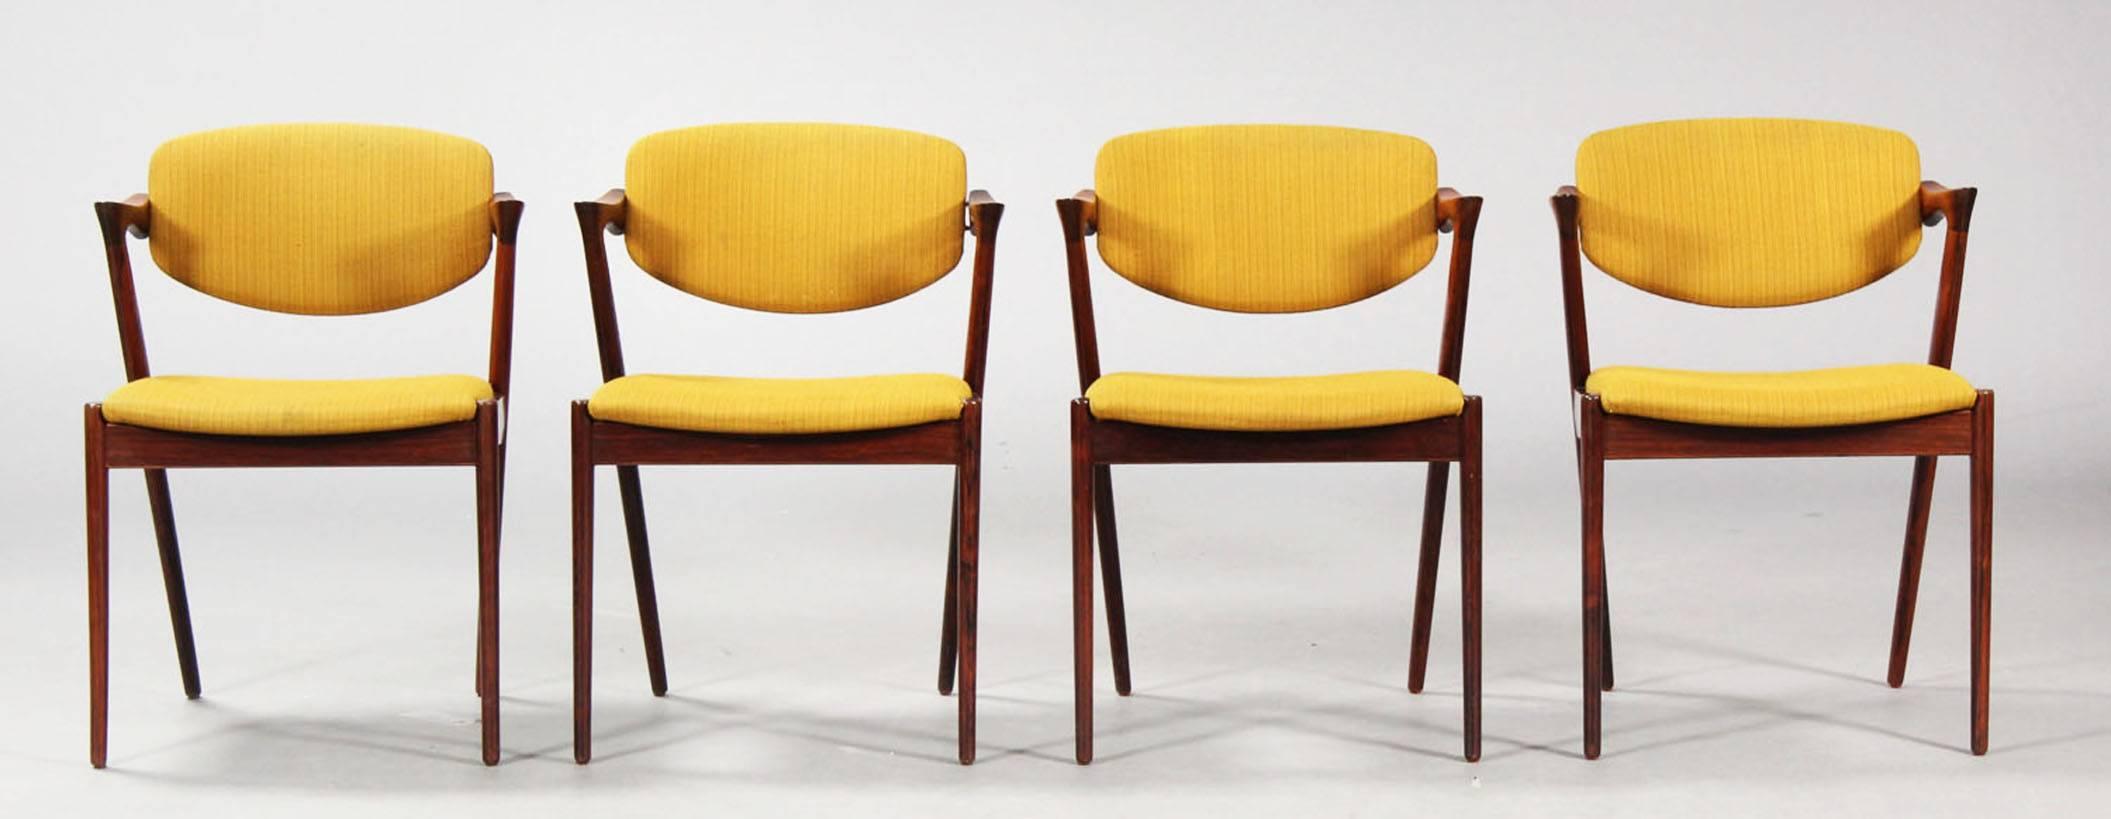 Hardwood Chairs by Kai Kristiansen Model 42